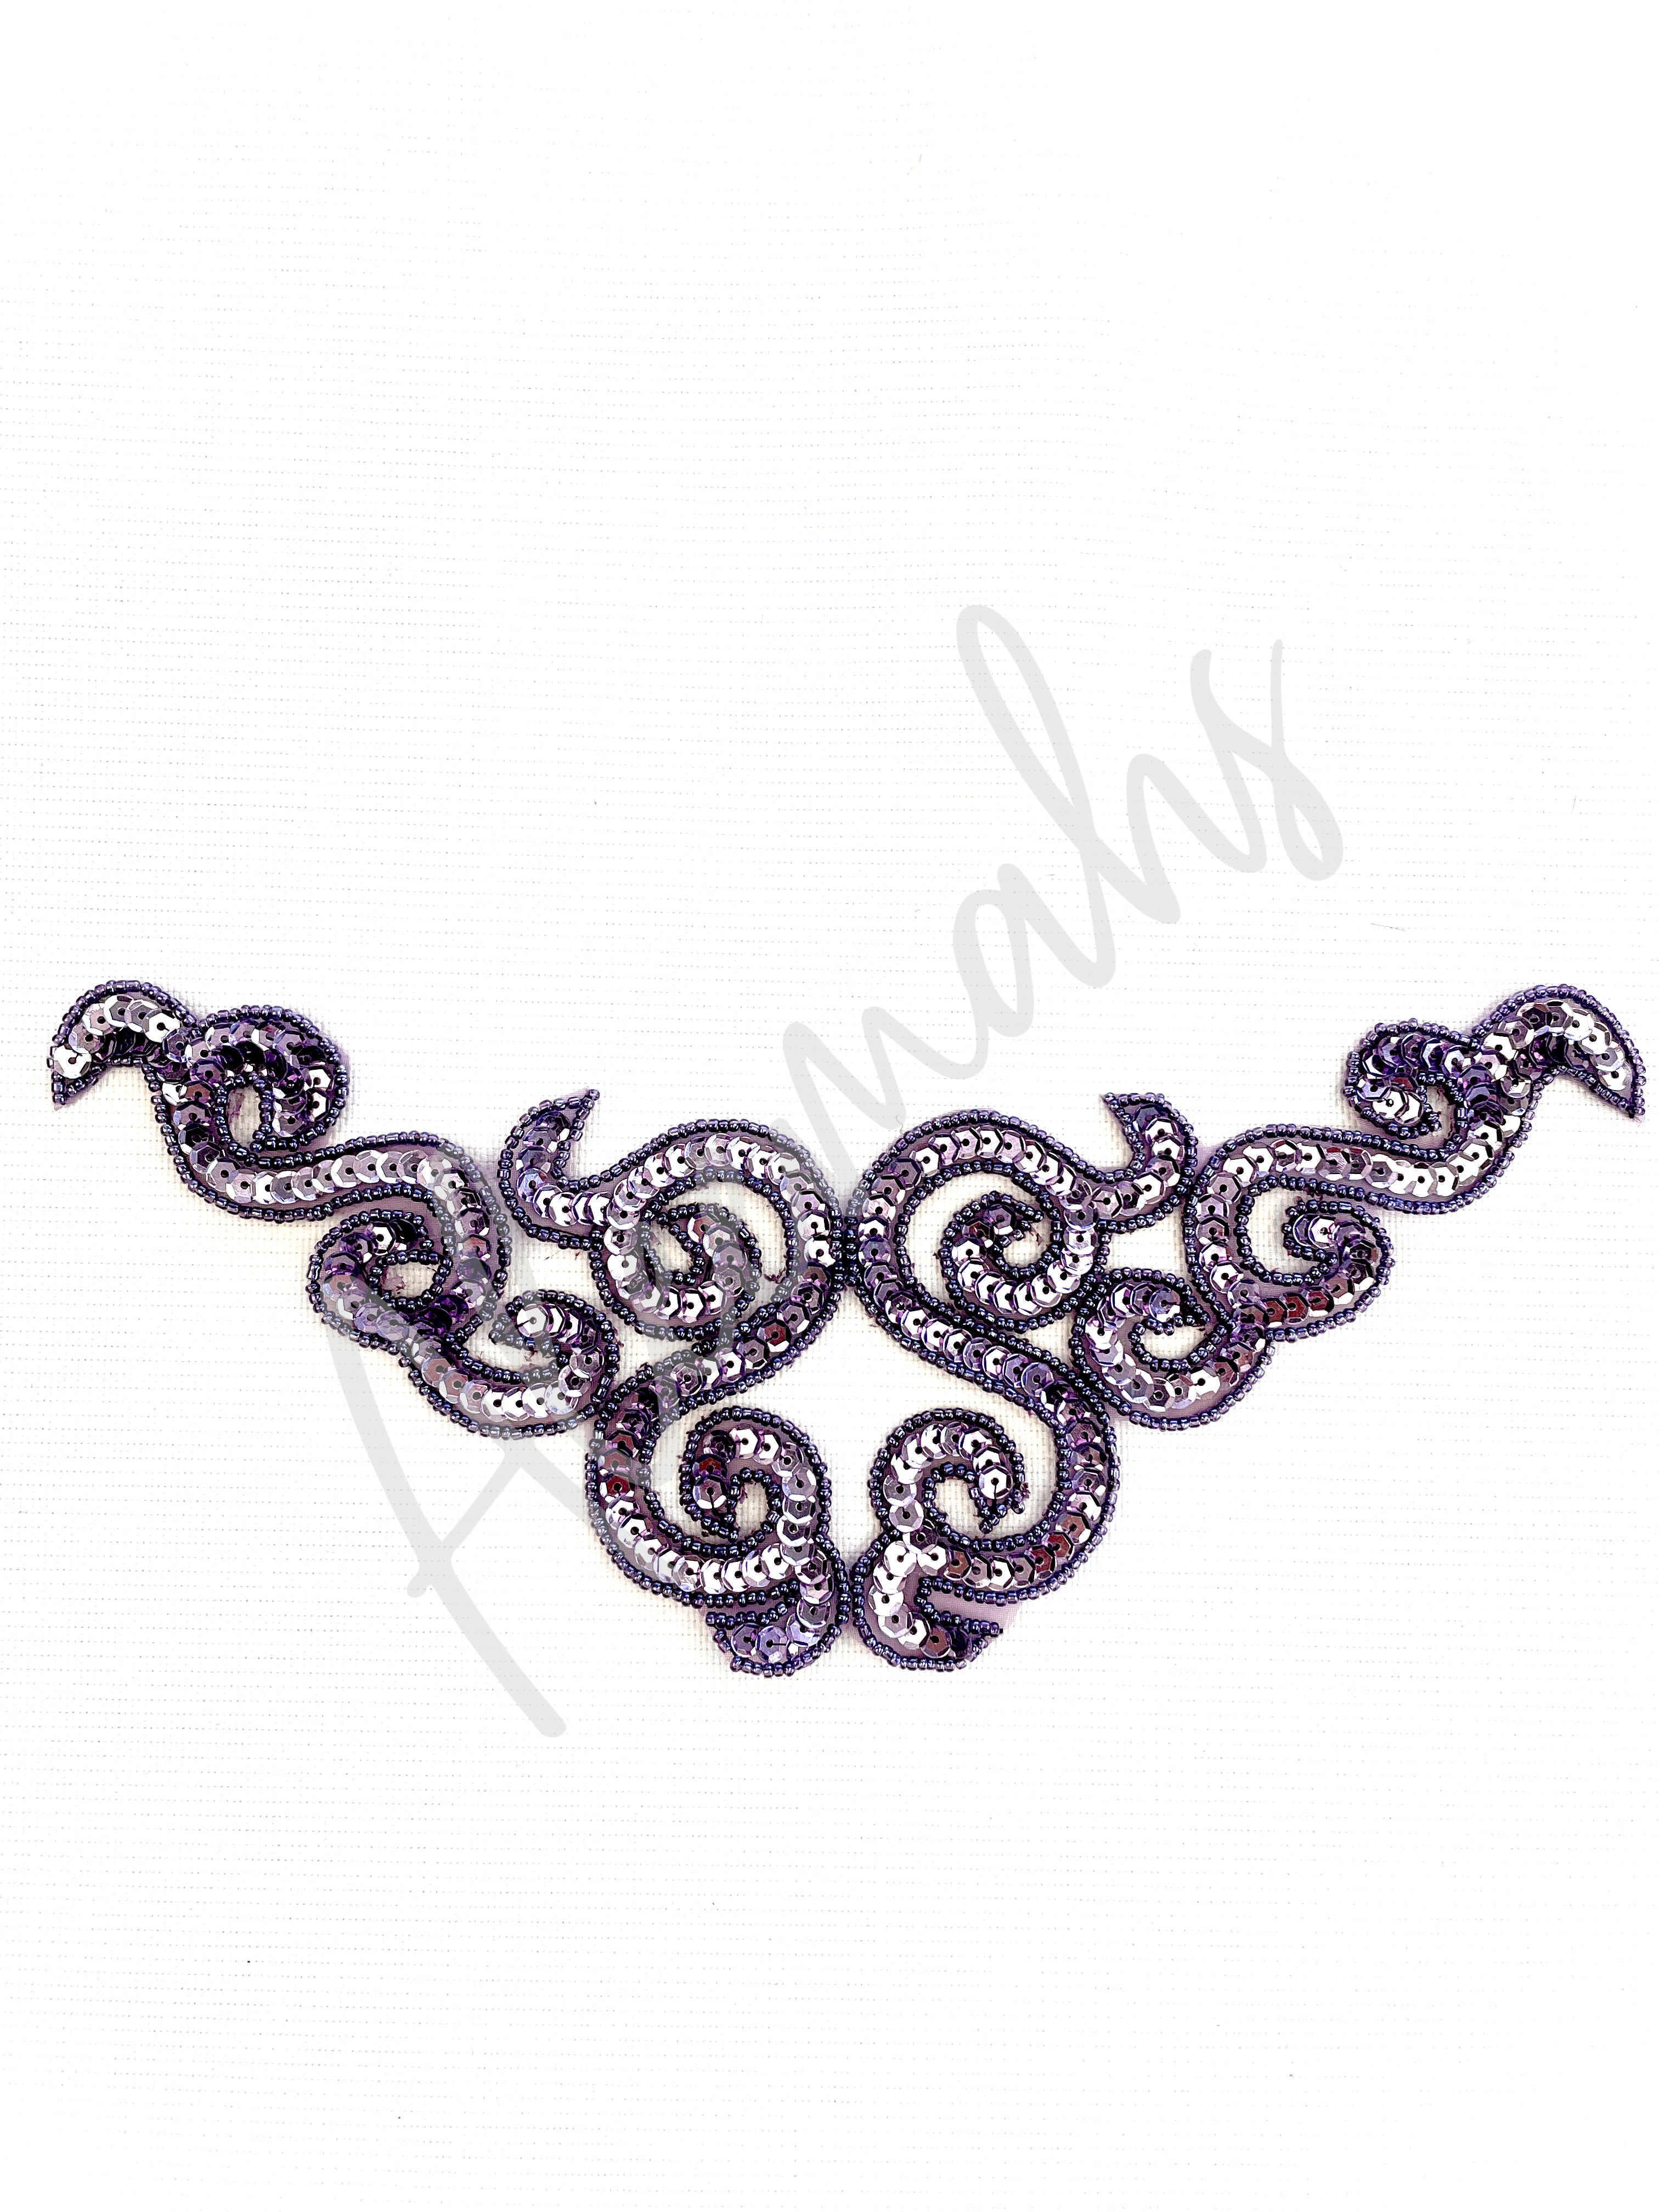 A-107: Metallic Lilac sequin and bead applique